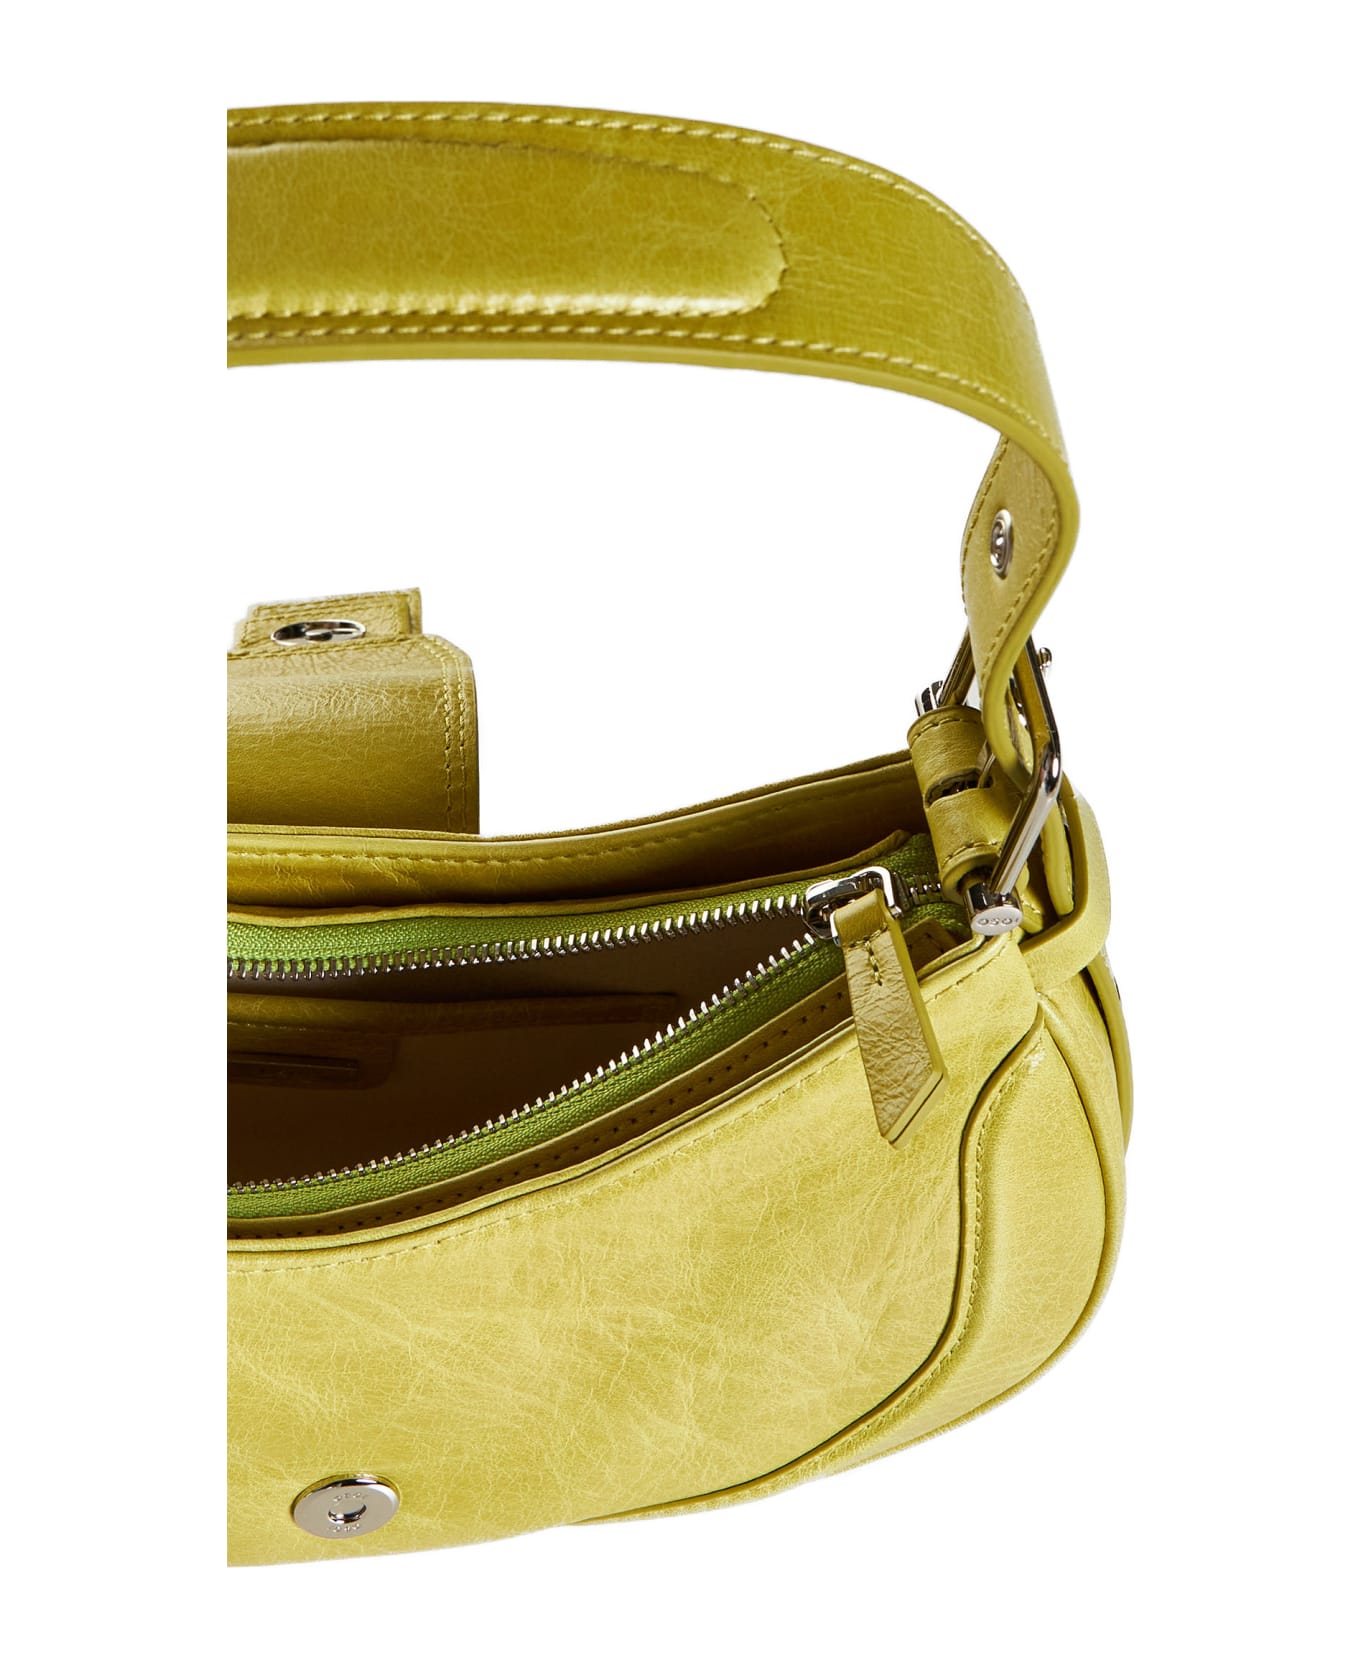 OSOI Shoulder Bag - Yellow green